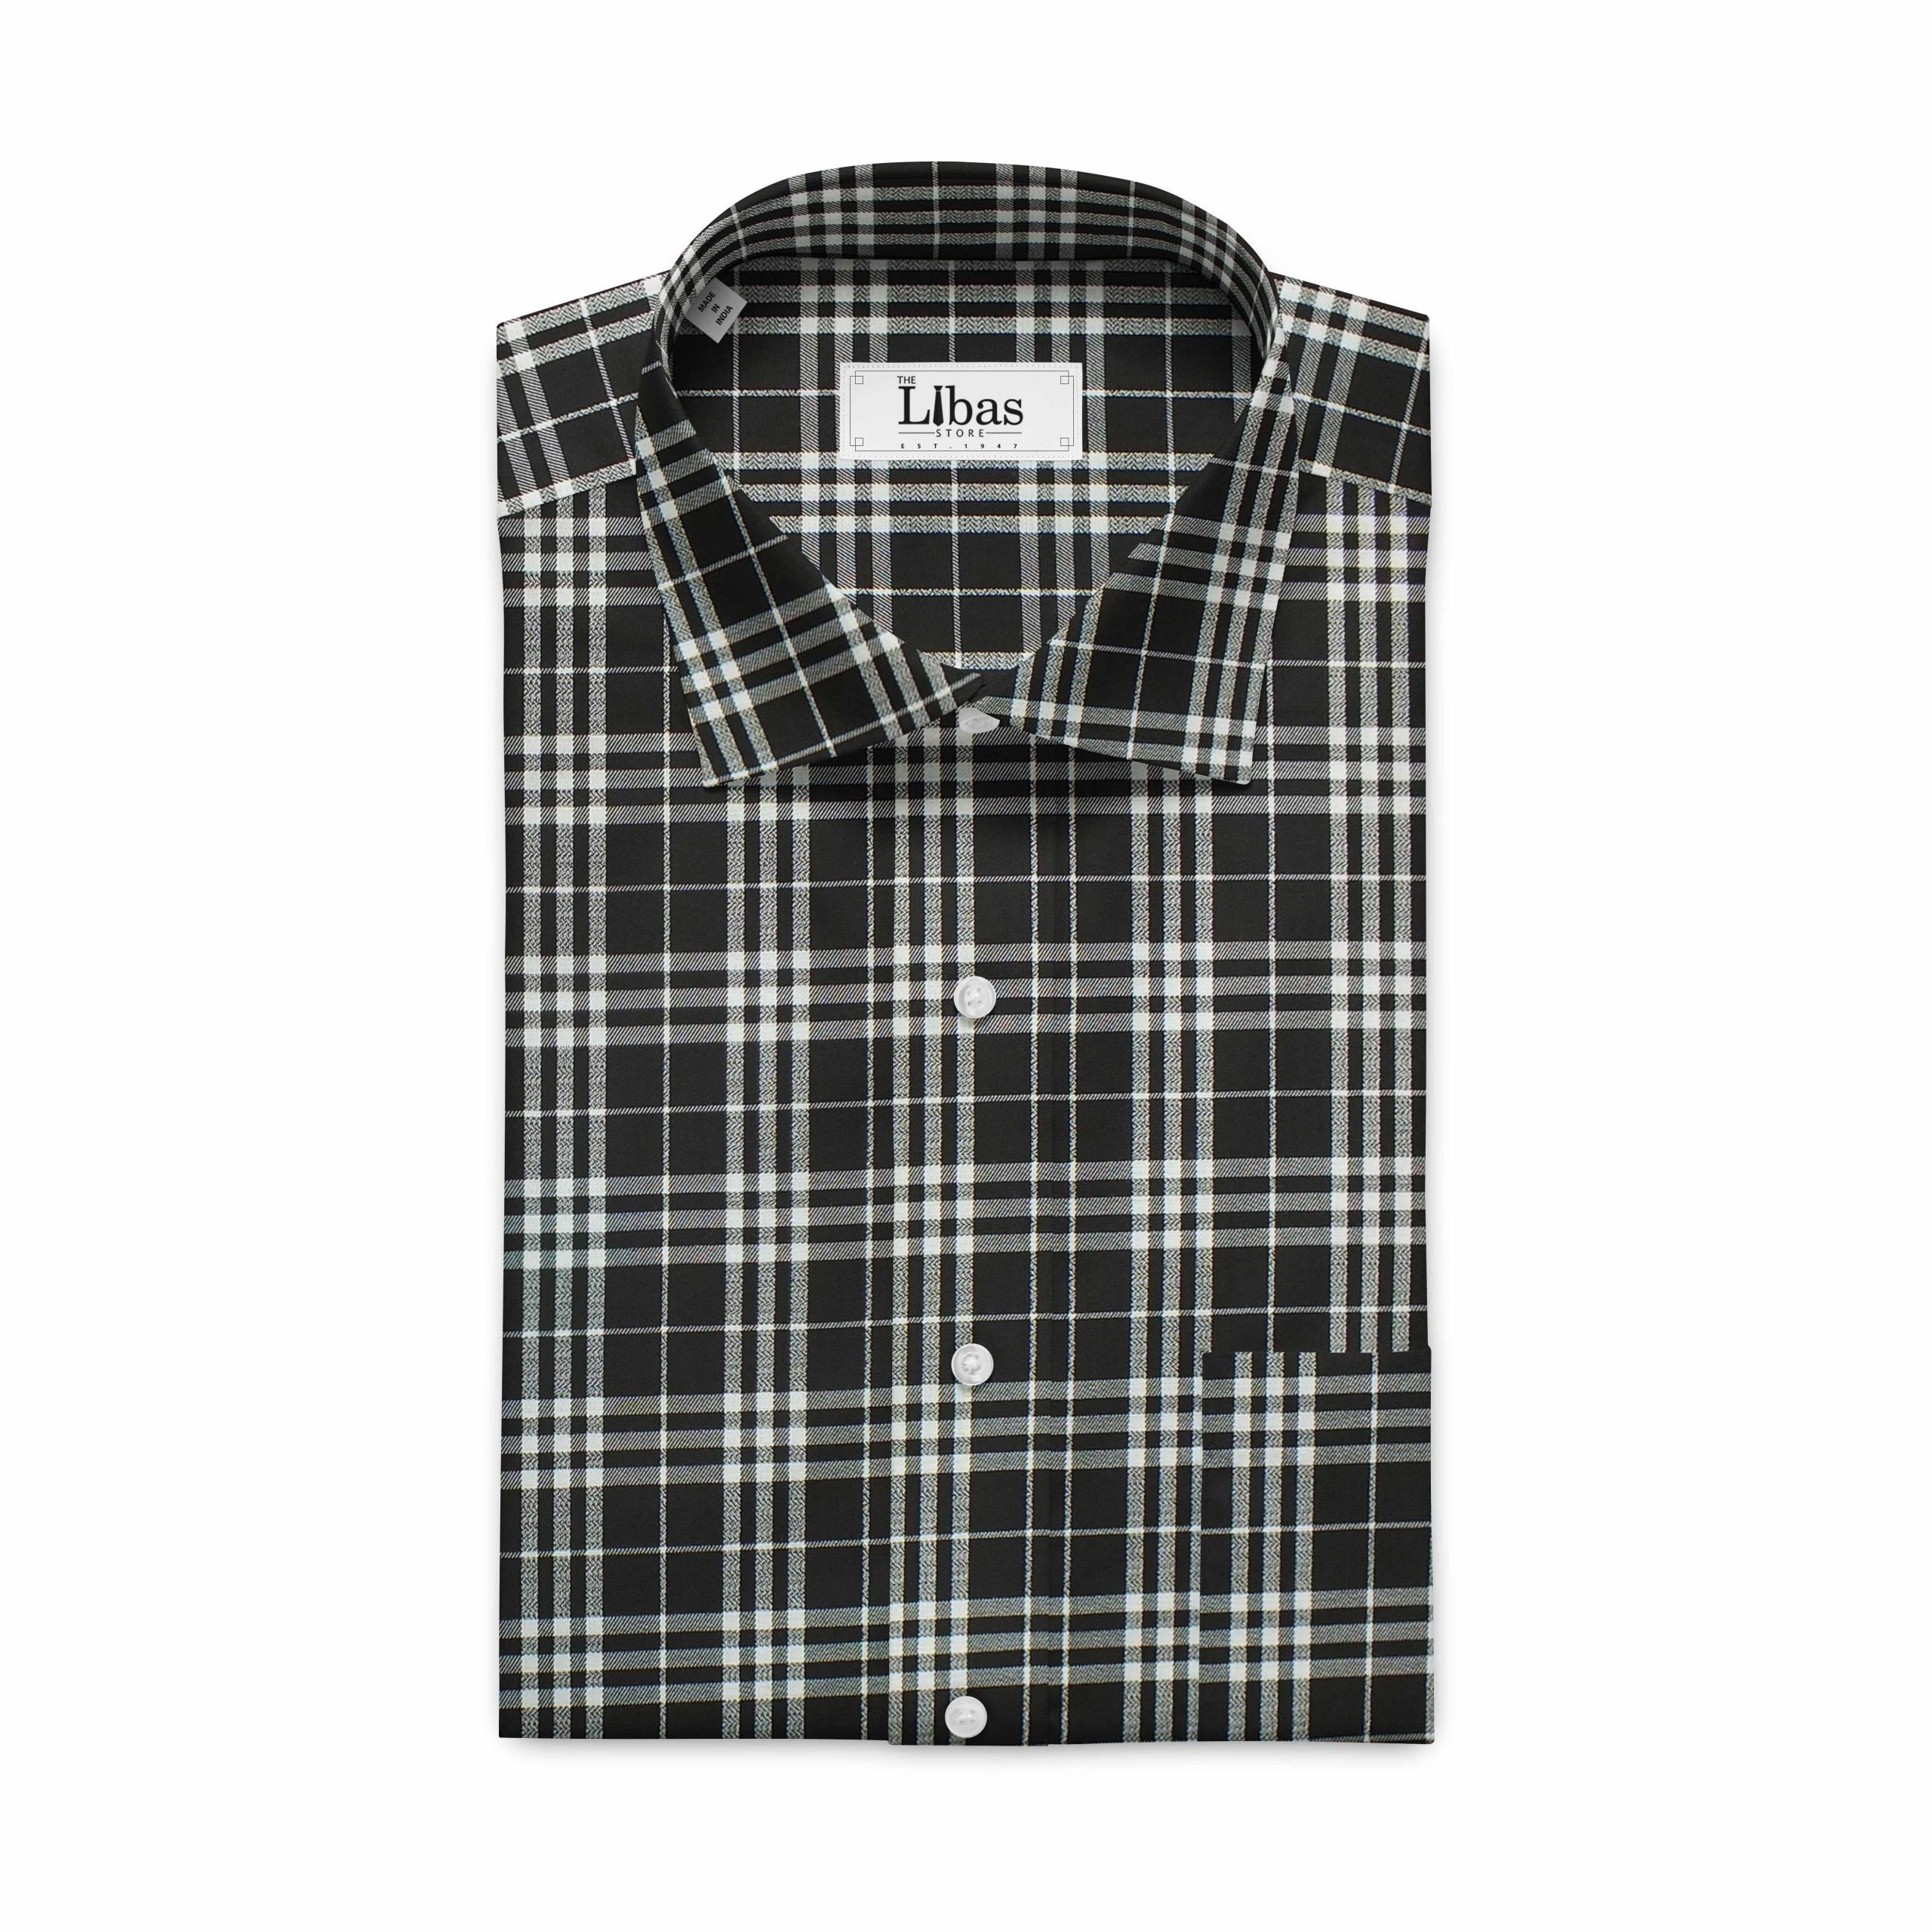 Soktas Men's Black & White Giza Cotton Burberry Check Twill Weave Shirt Fabric